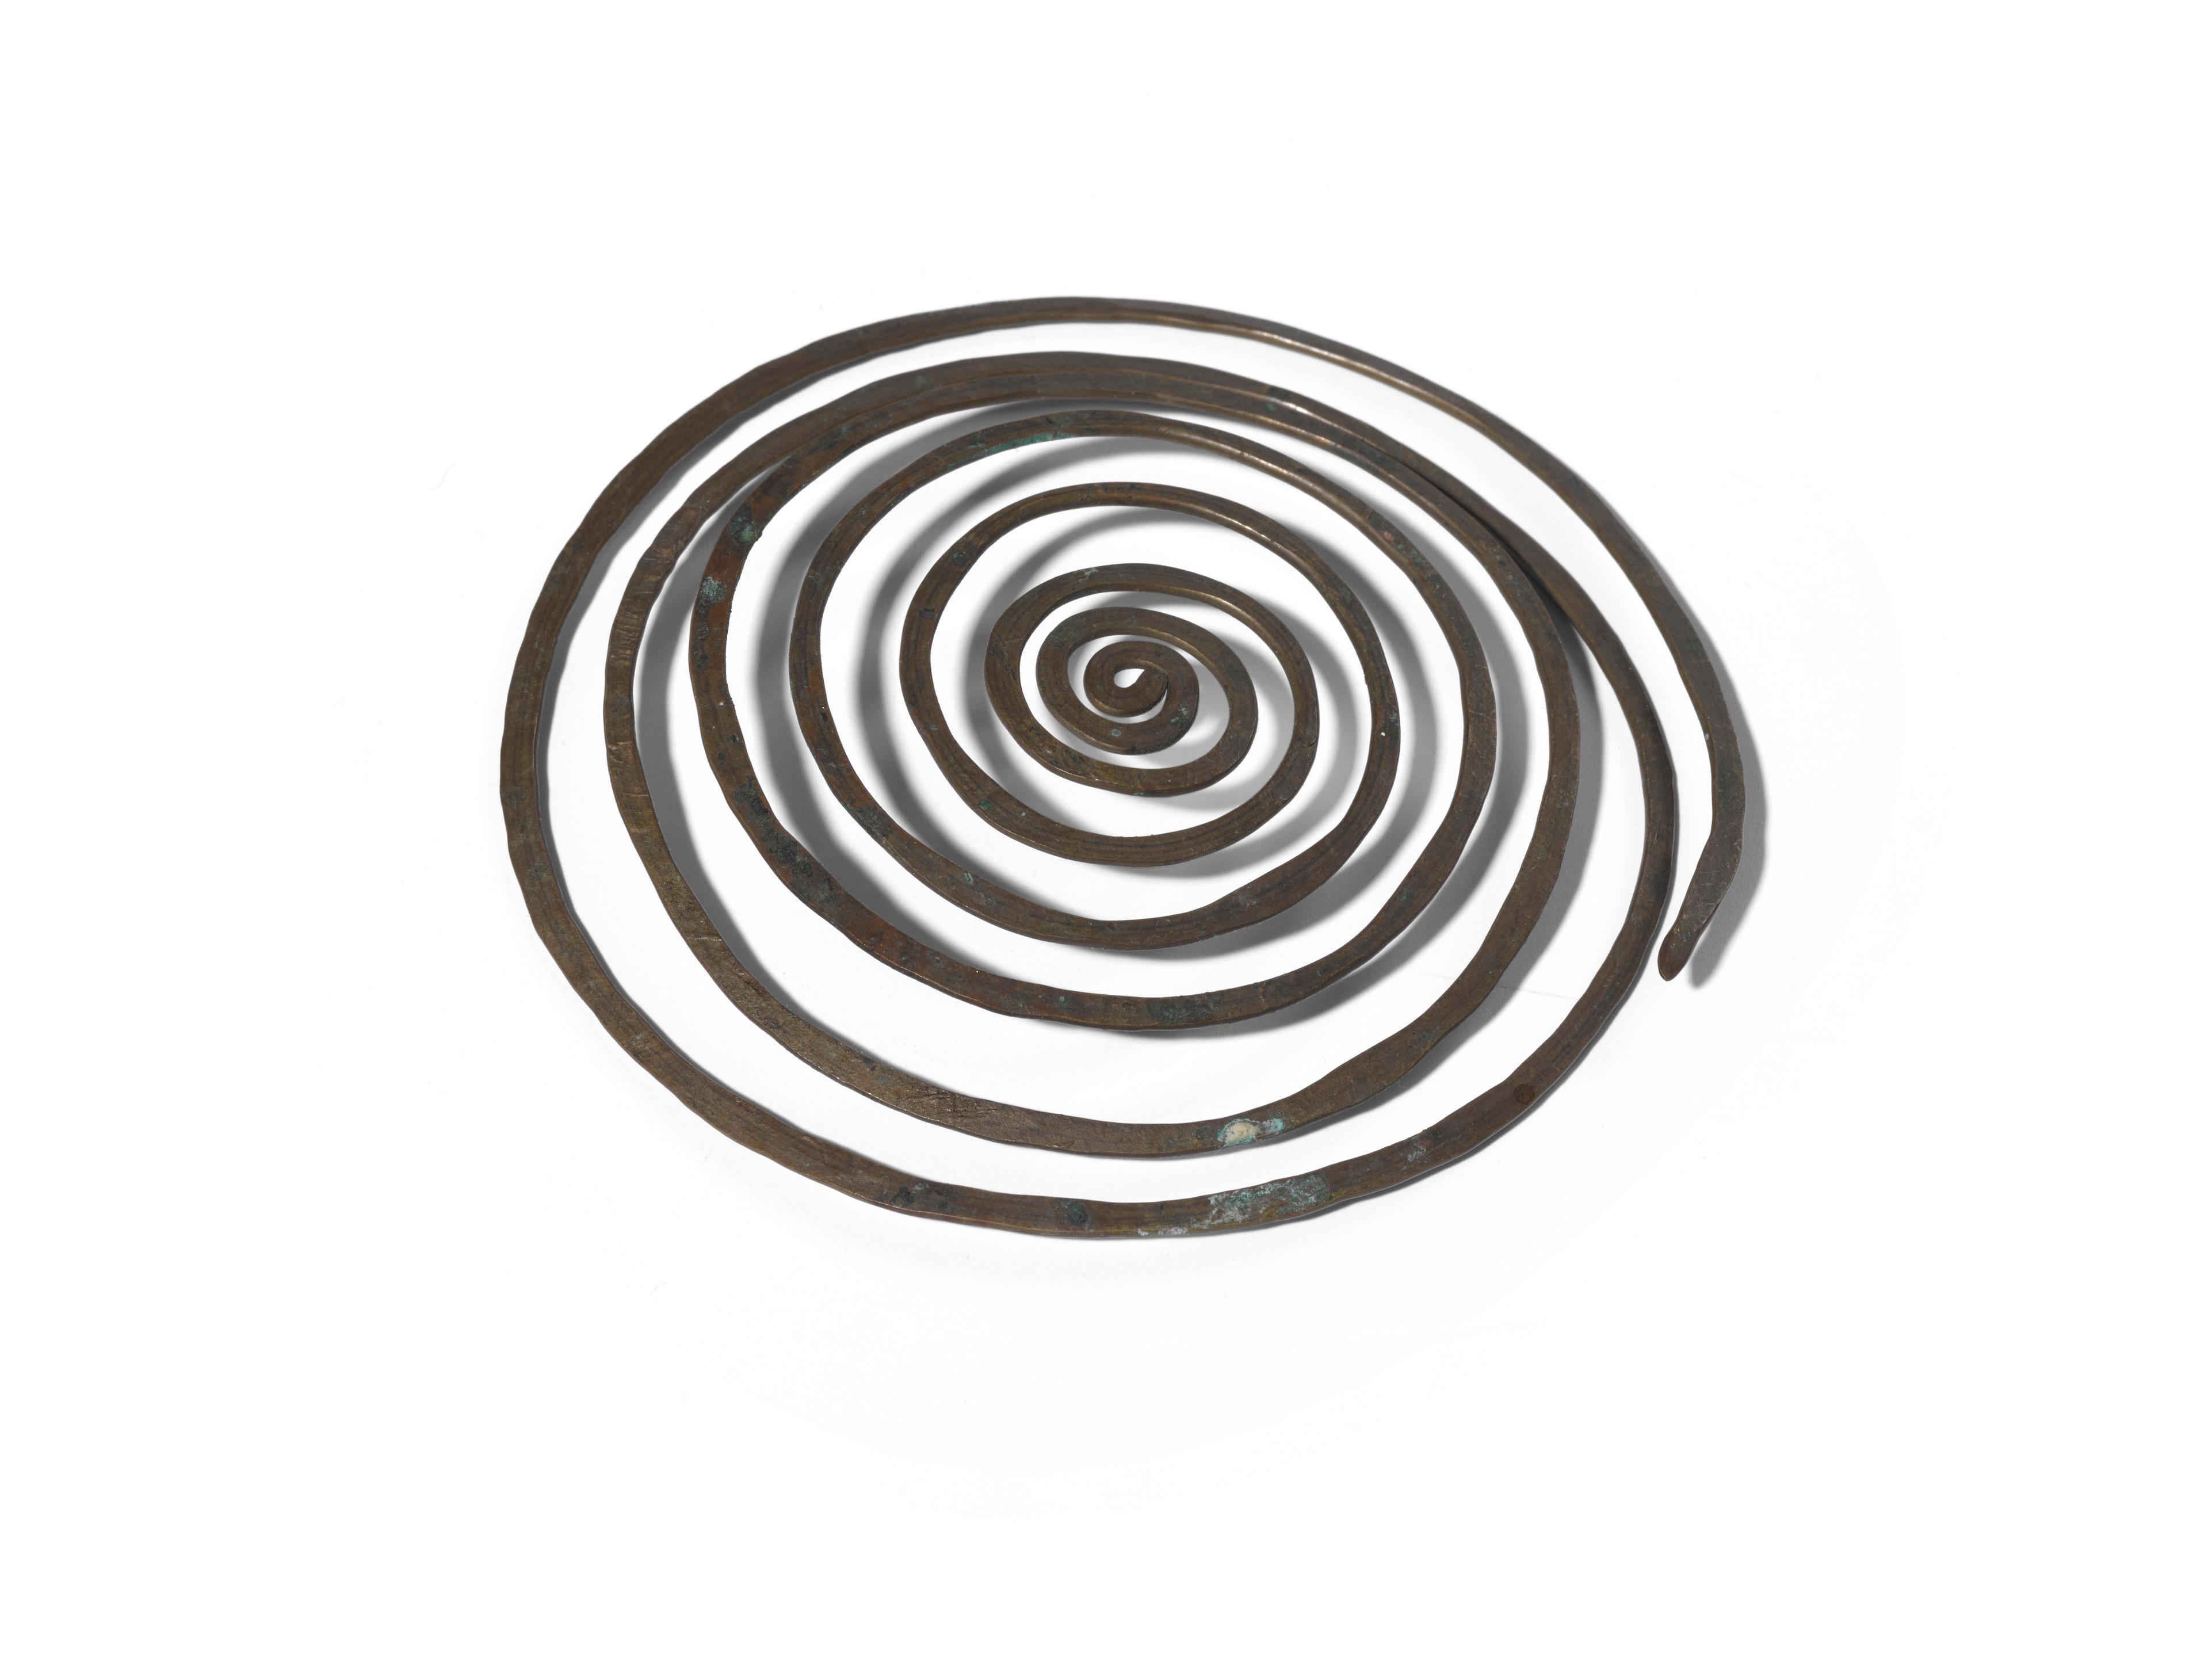 Alexander Calder - The Spiral (maquette) 4/6